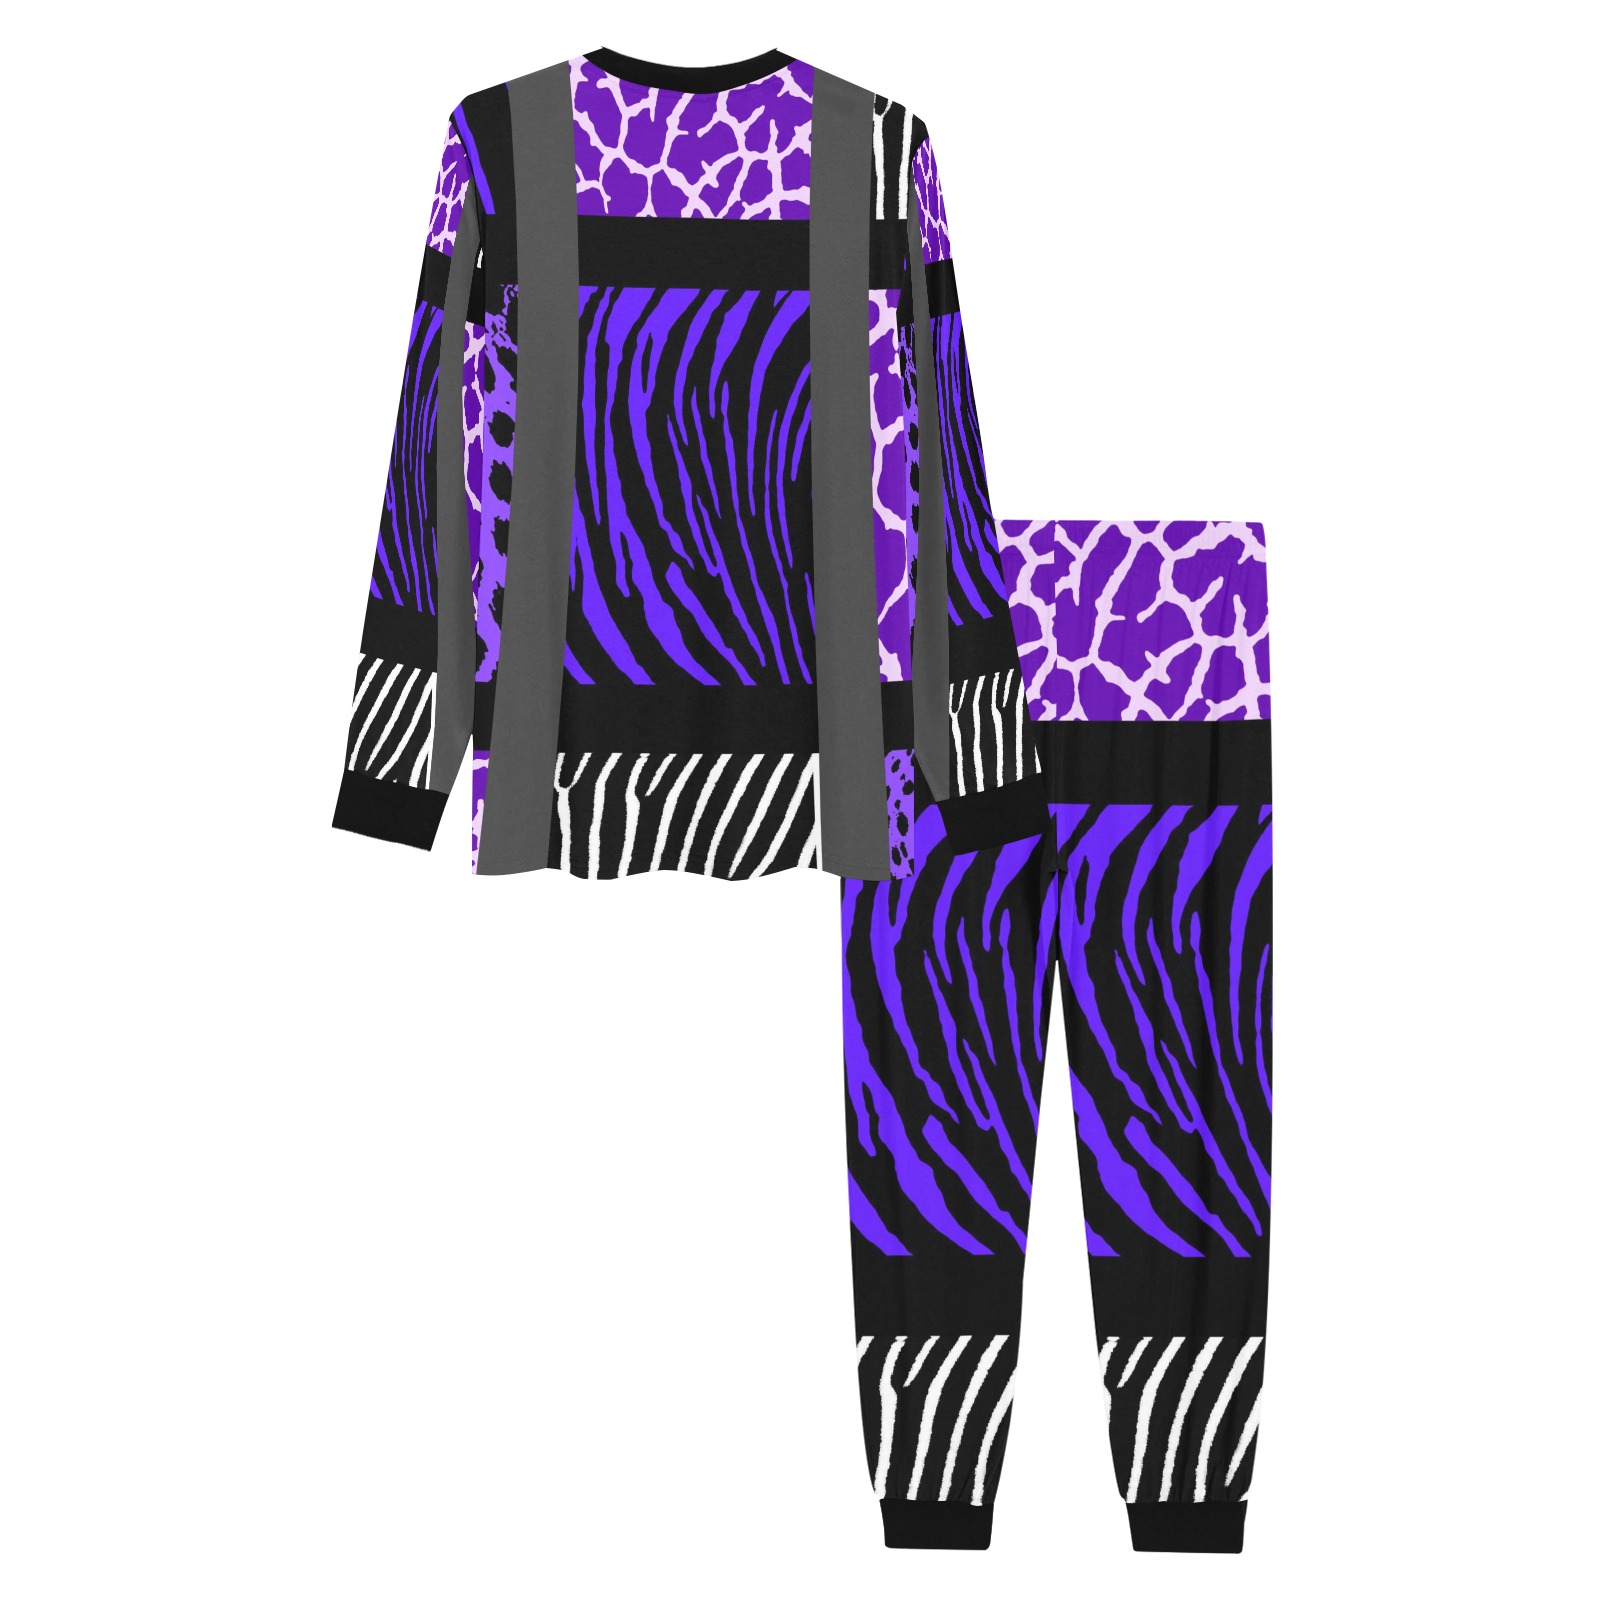 Purple Mixed Animal Print Men's All Over Print Pajama Set